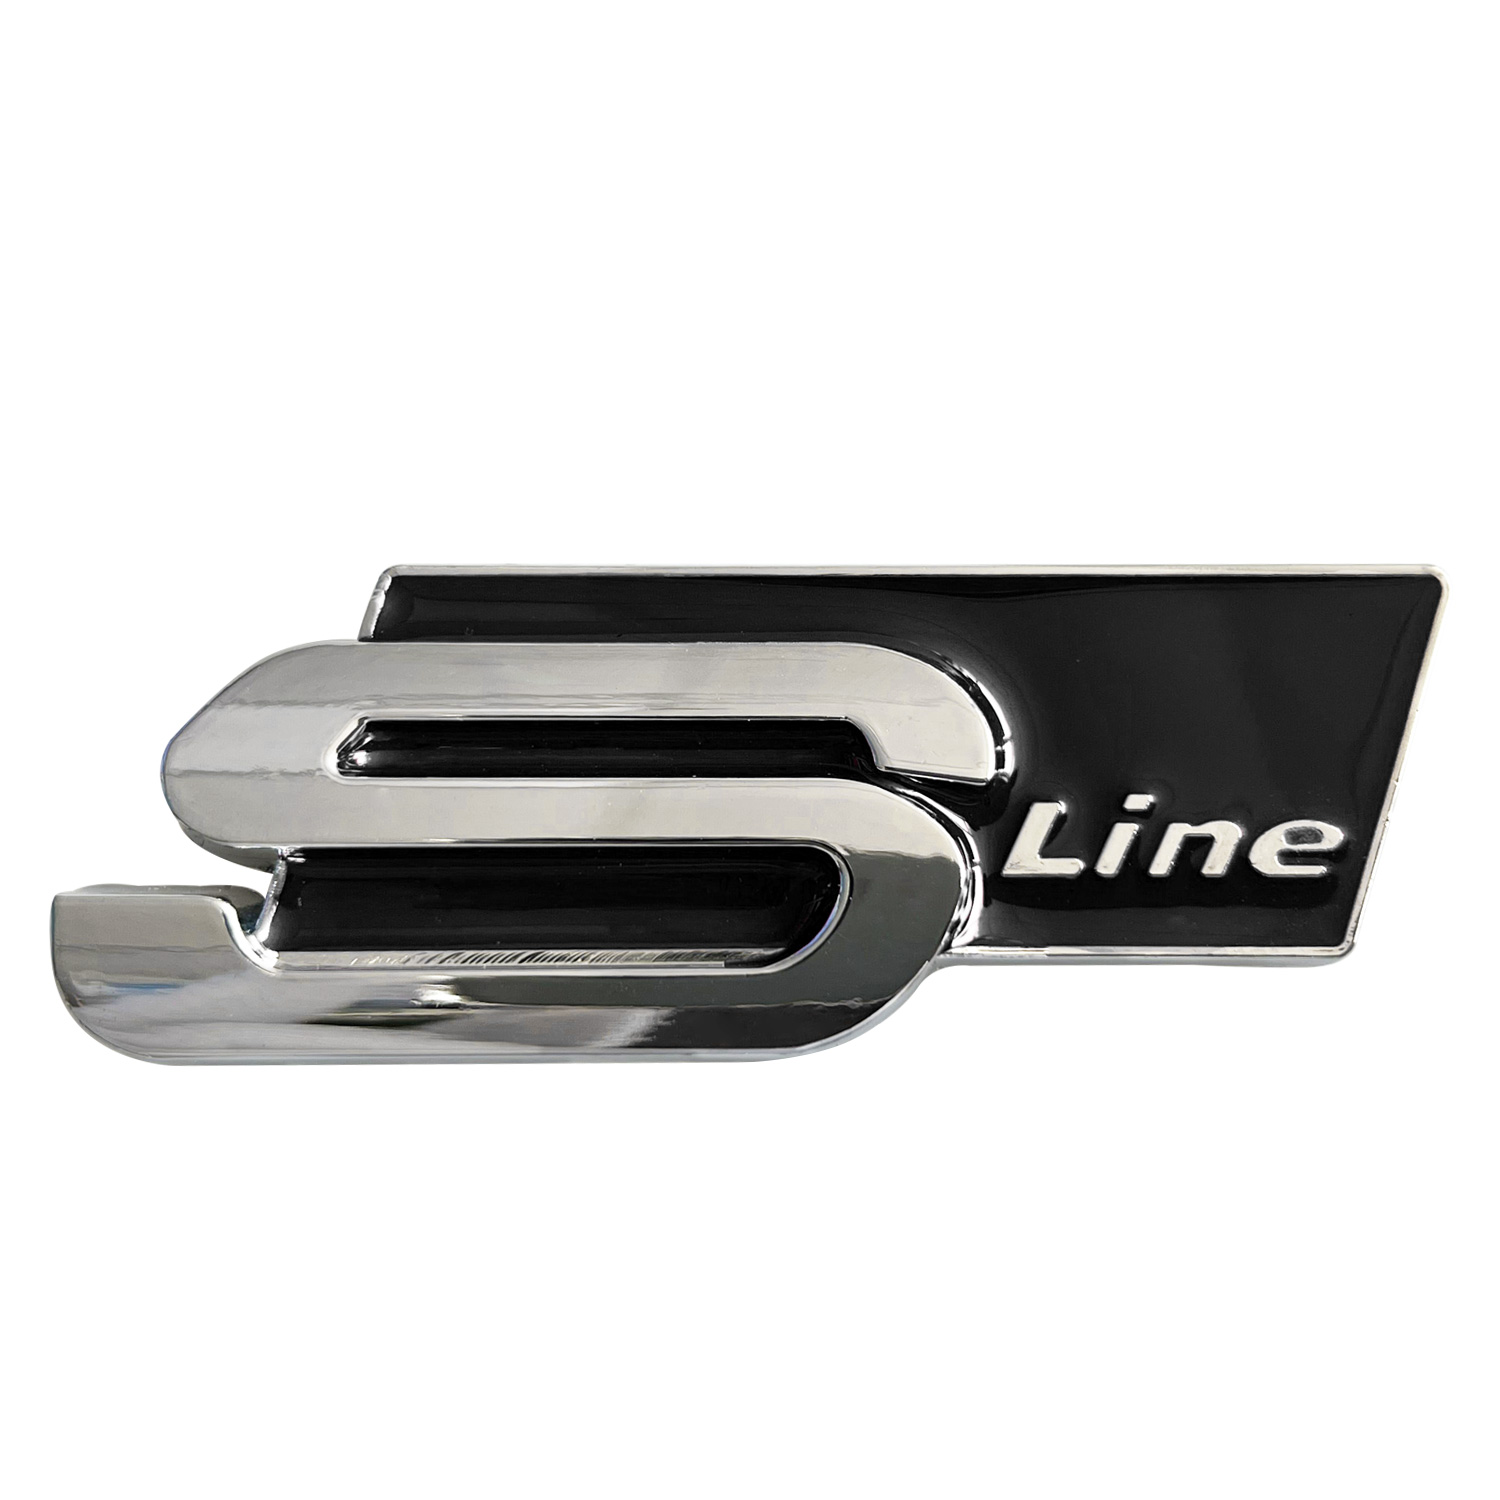 S Line Emblem Car Sticker Decal for Audi A1 A3 A4 A5 A6 A8 Q3 Q5 Q7 BOLLAER Car Styling S Line Sline Badge Logo Sticker Lettering 